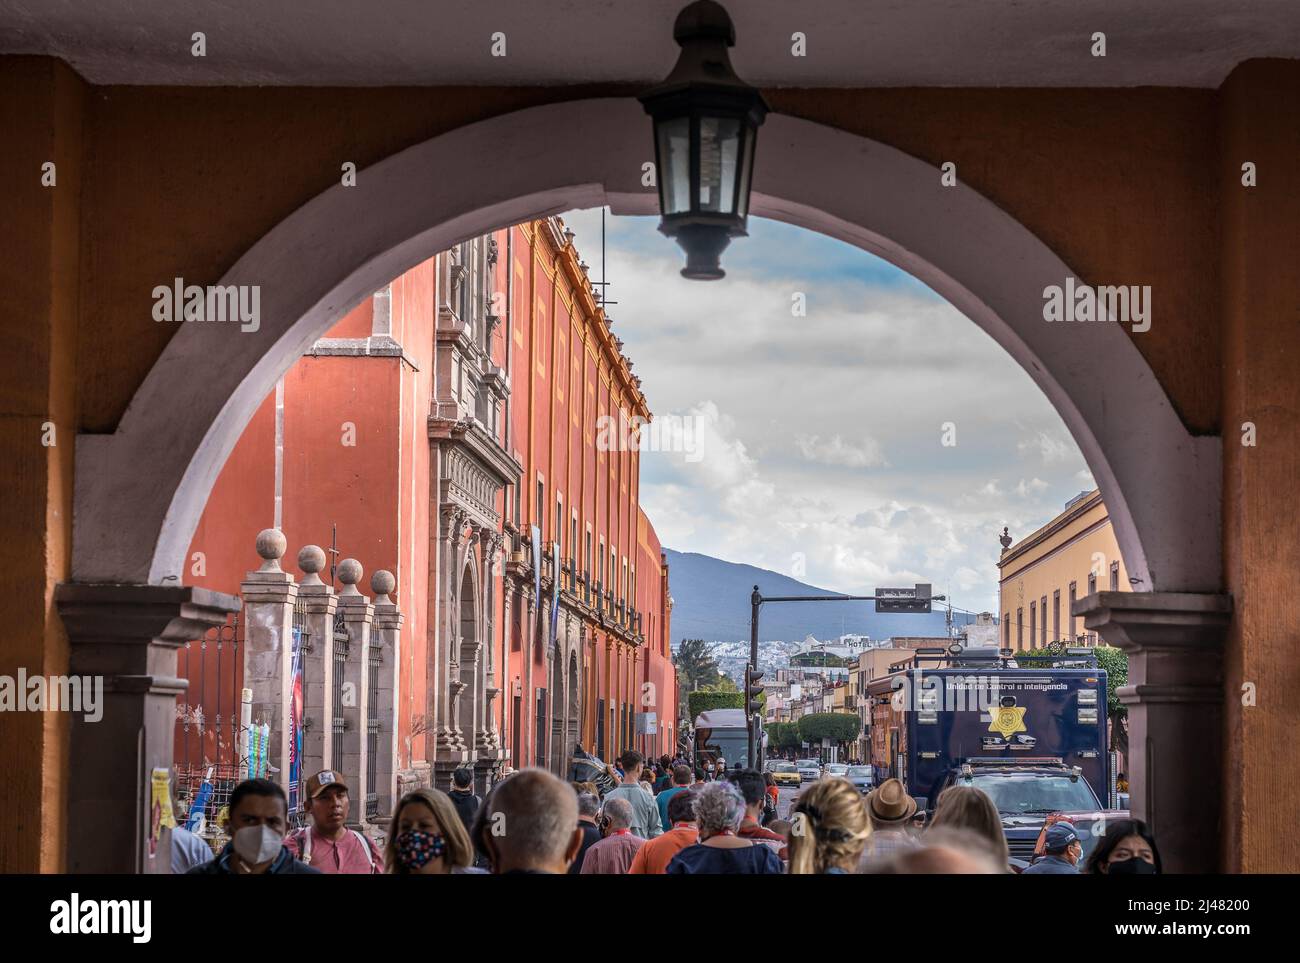 querétaro, México - 20 de diciembre de 2021. La antigua ciudad colonial del centro de Querétaro, México Foto de stock